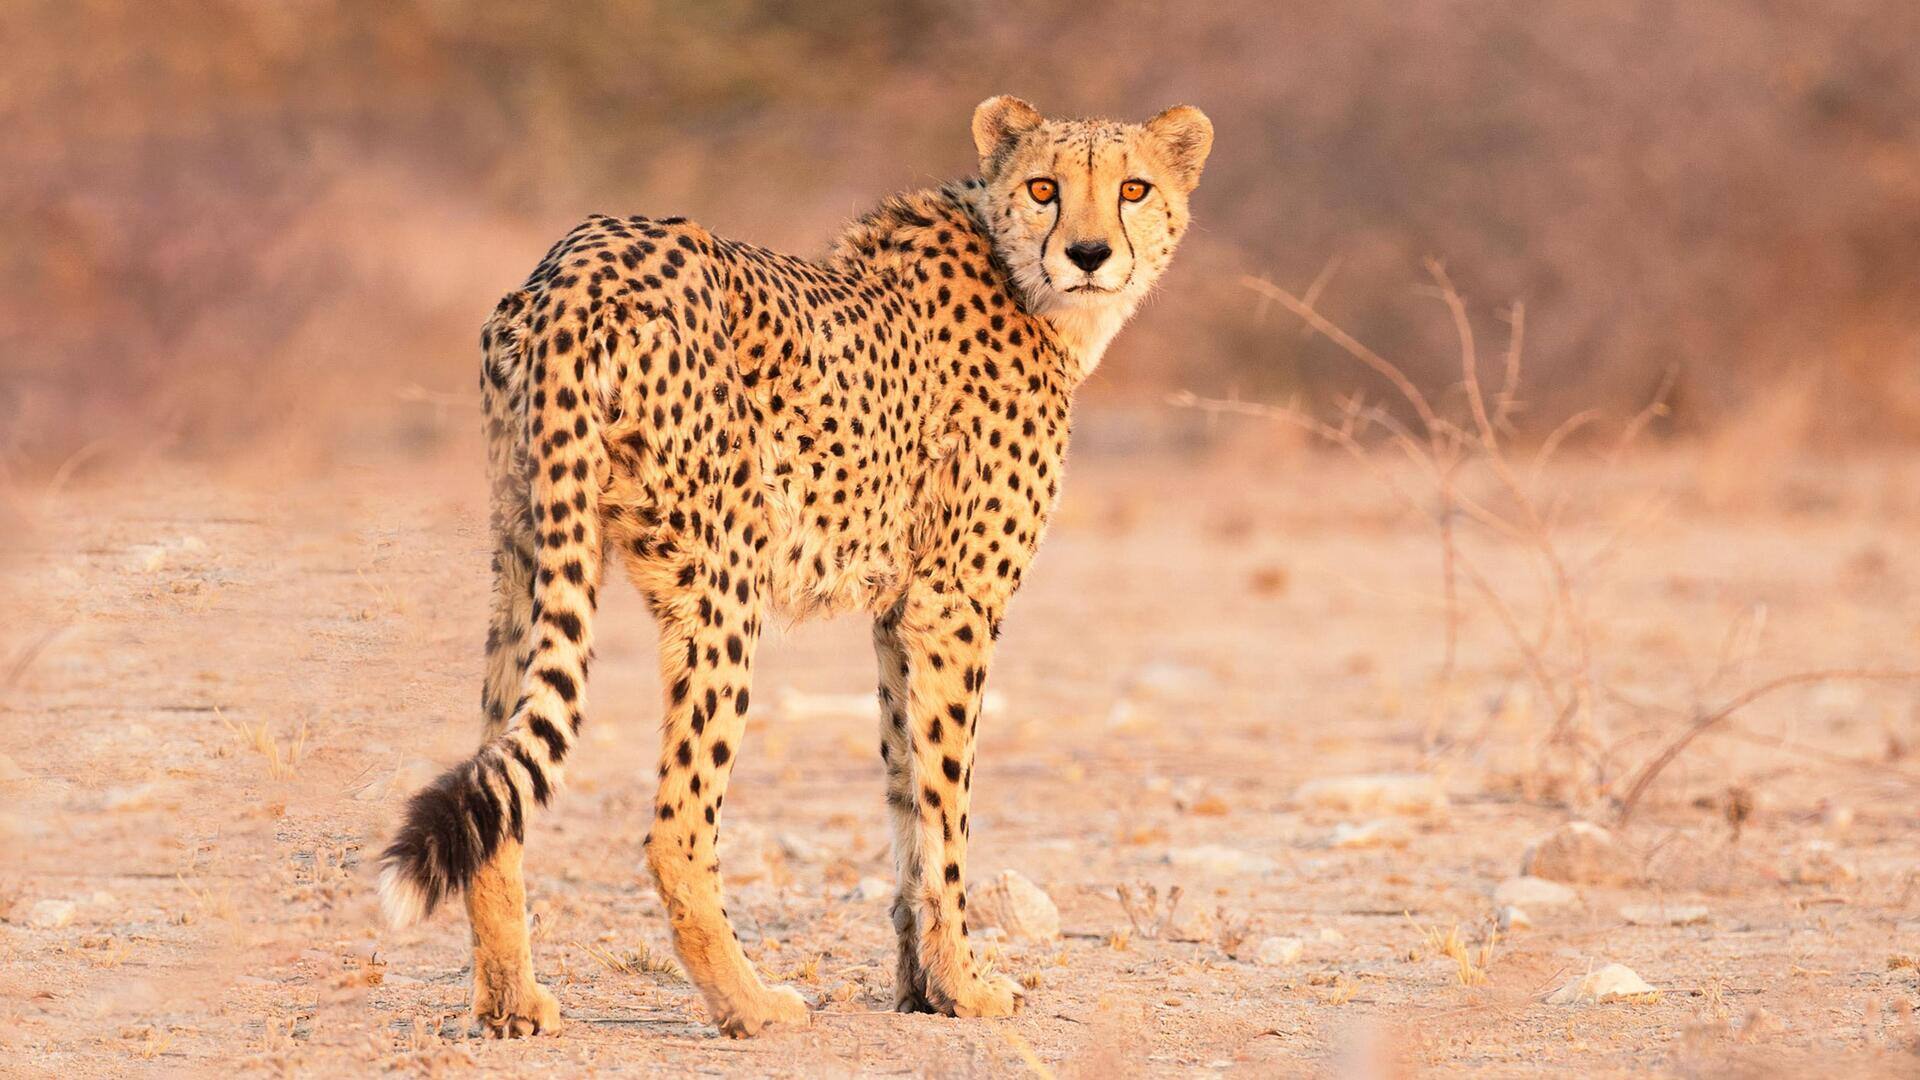 Namibian cheetah: కునో పార్క్ వద్ద నమీబియా చిరుత మృతి.. ప్రాజెక్ట్ ప్రారంభించినప్పటి నుండి 10వ మరణం 